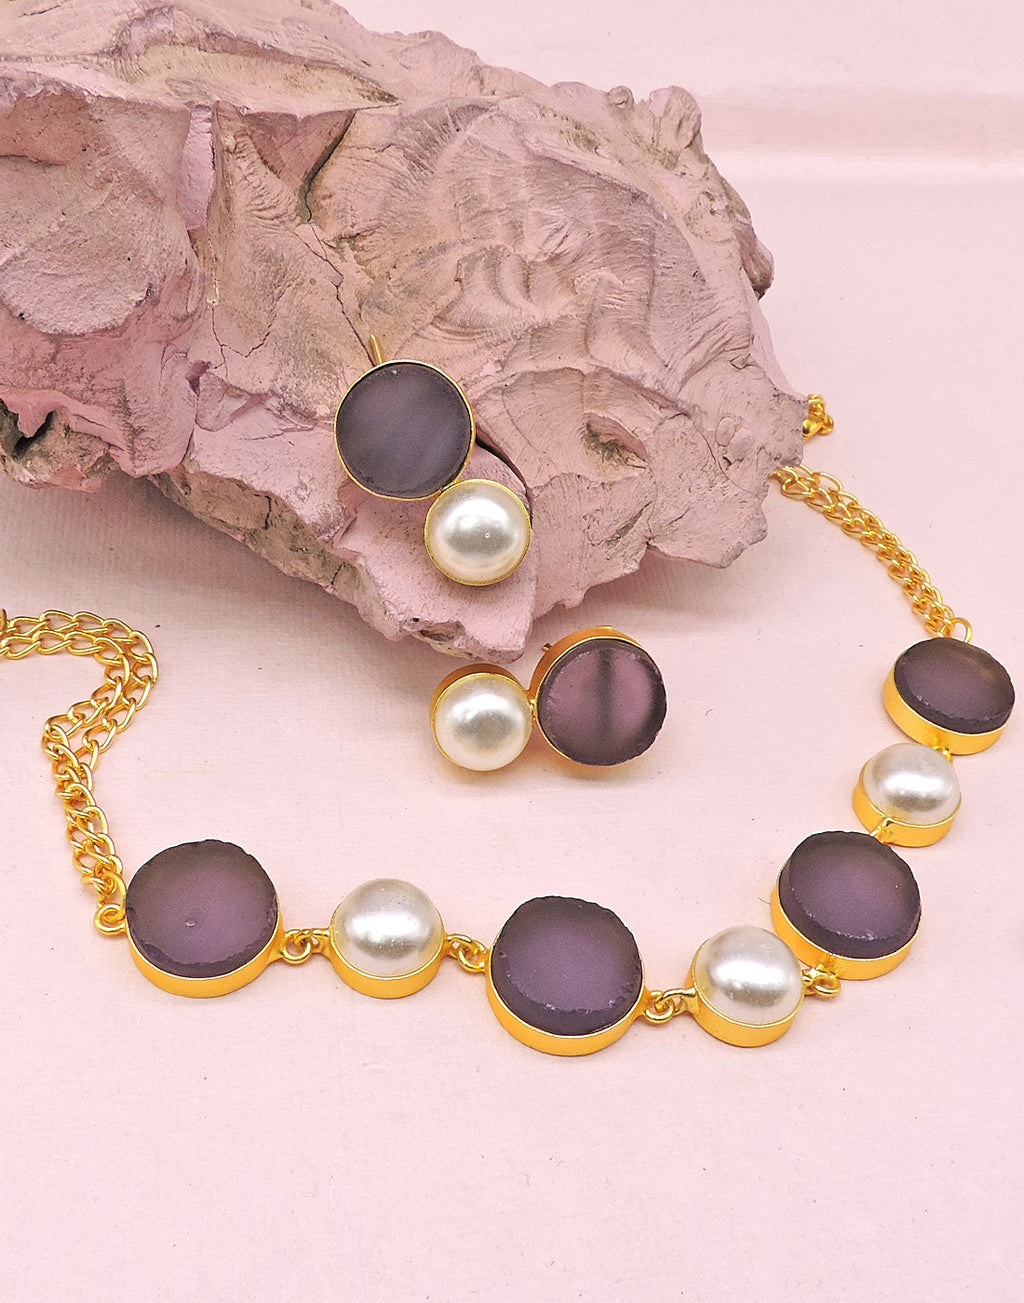 Pearl & Stone Earrings (Amethyst) - Statement Earrings - Gold-Plated & Hypoallergenic Jewellery - Made in India - Dubai Jewellery - Dori